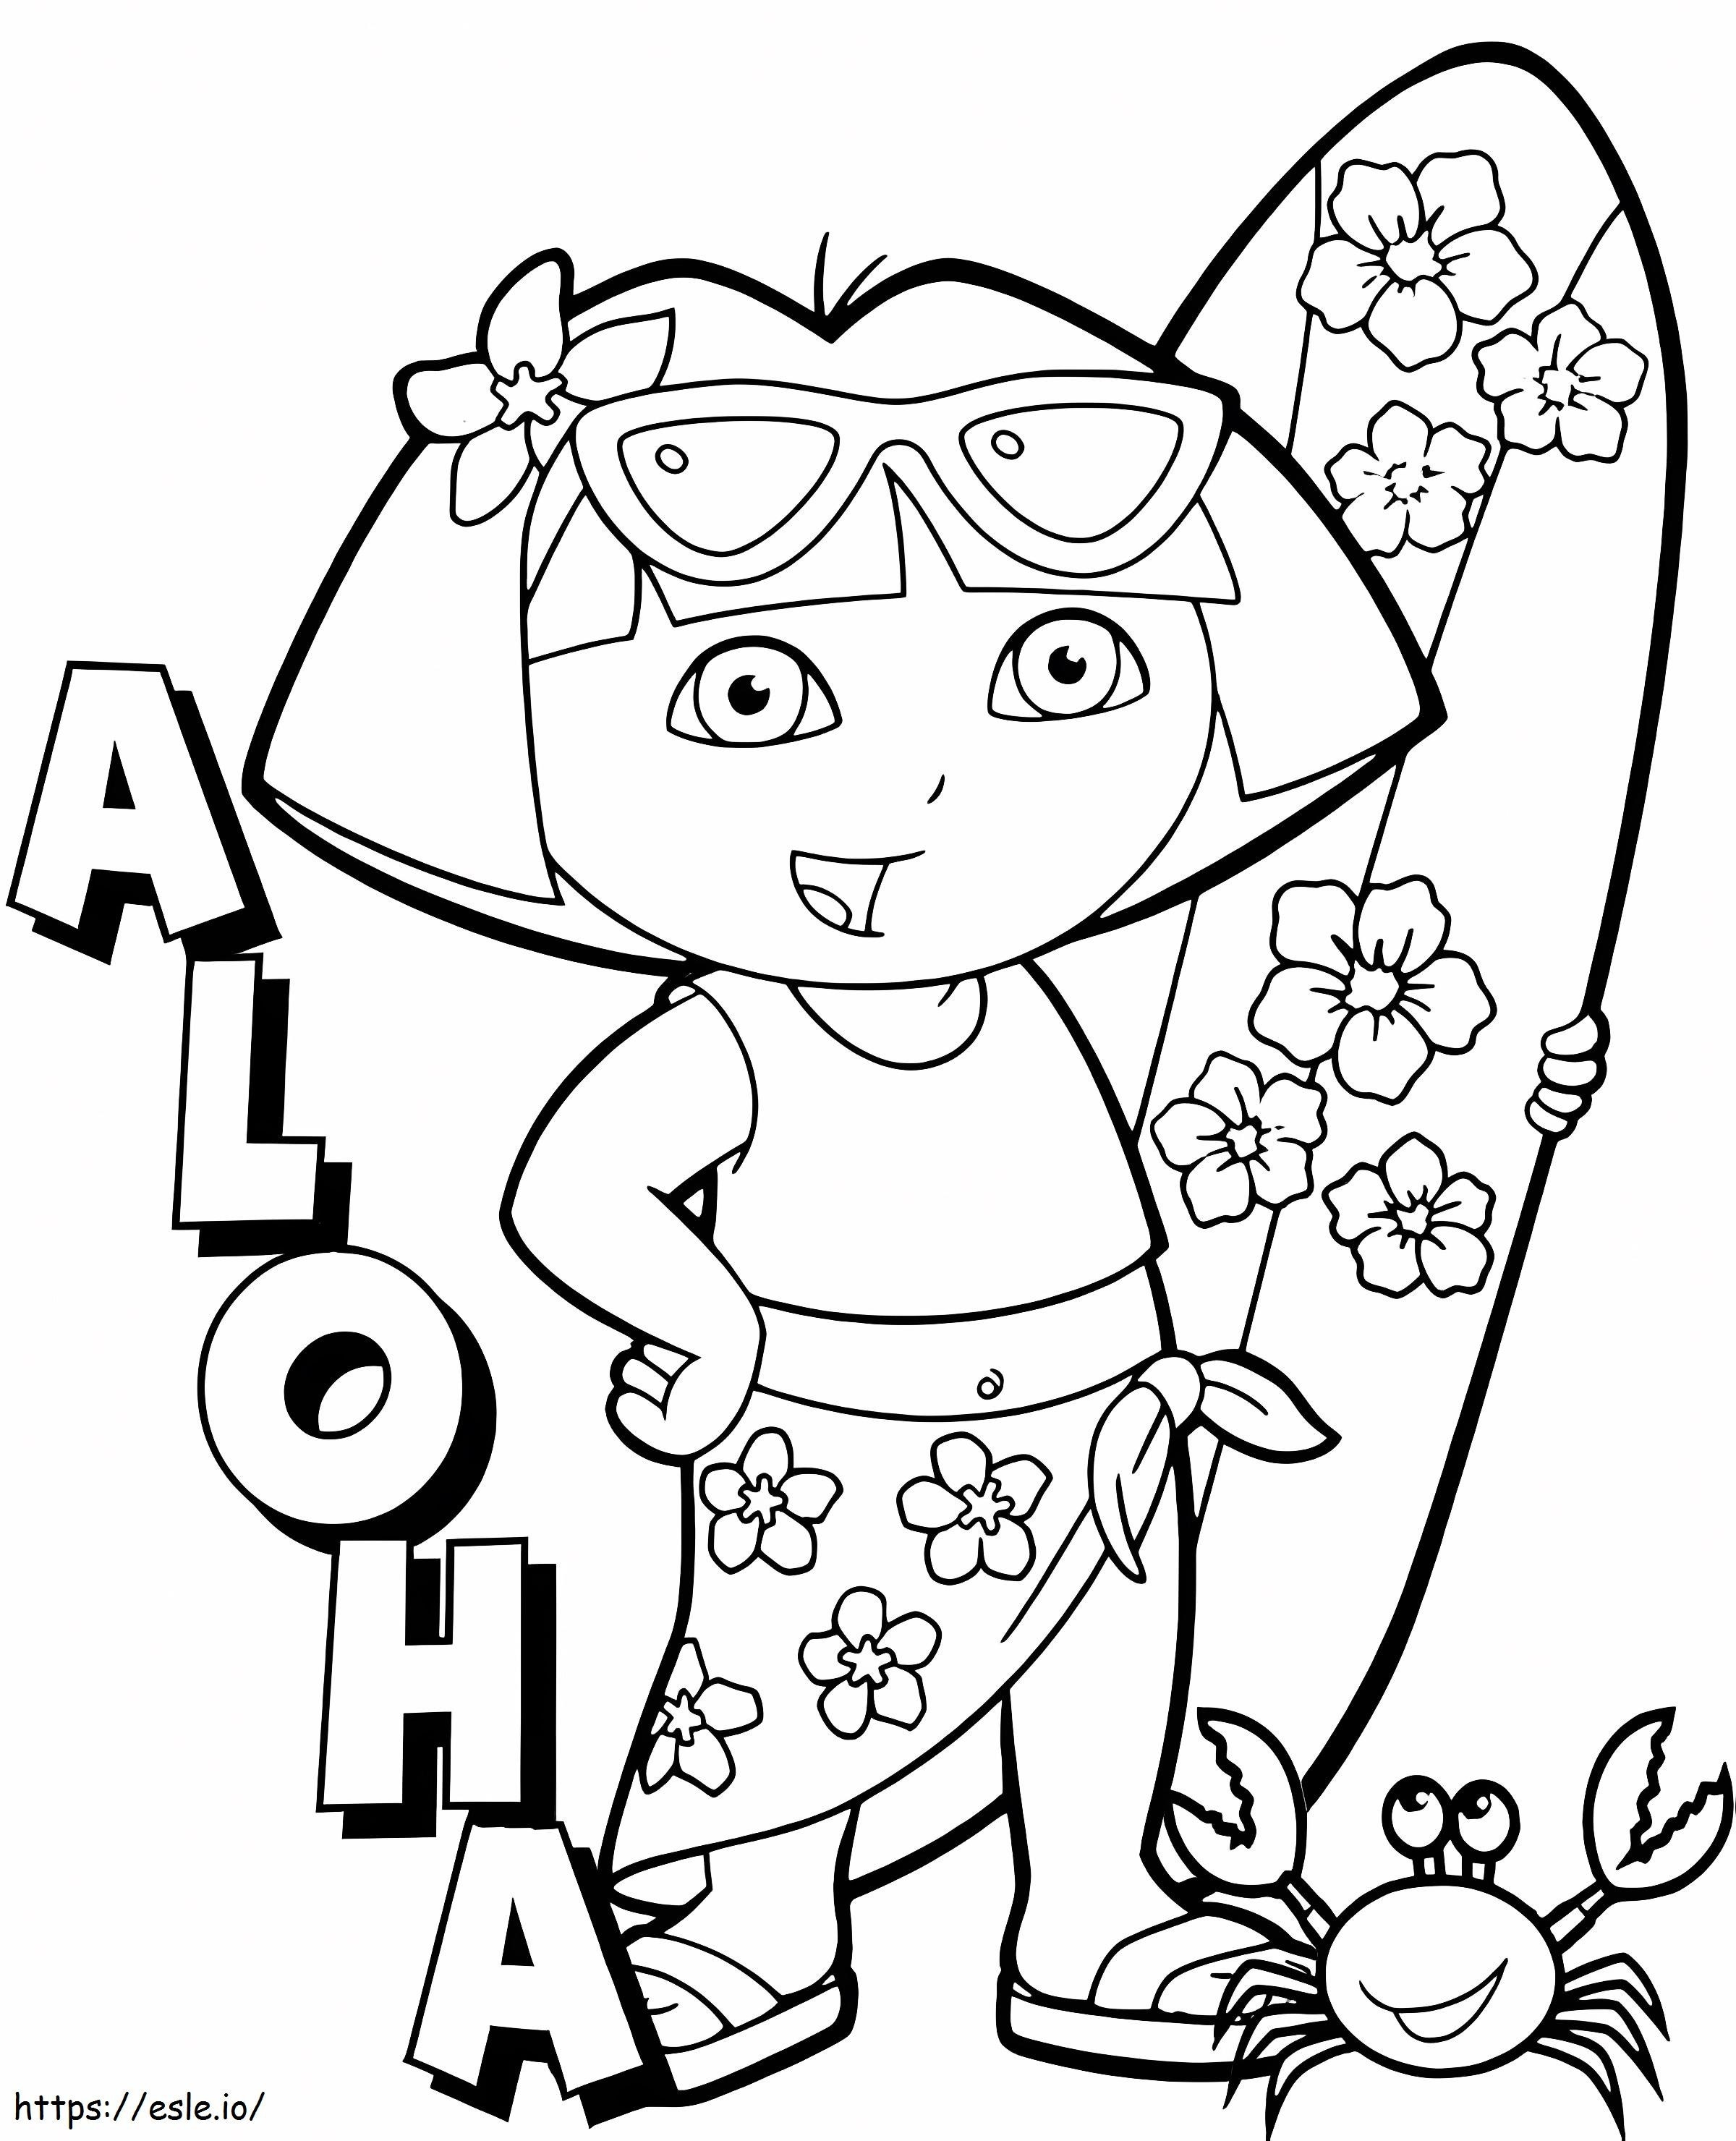 Aloha Dora kolorowanka